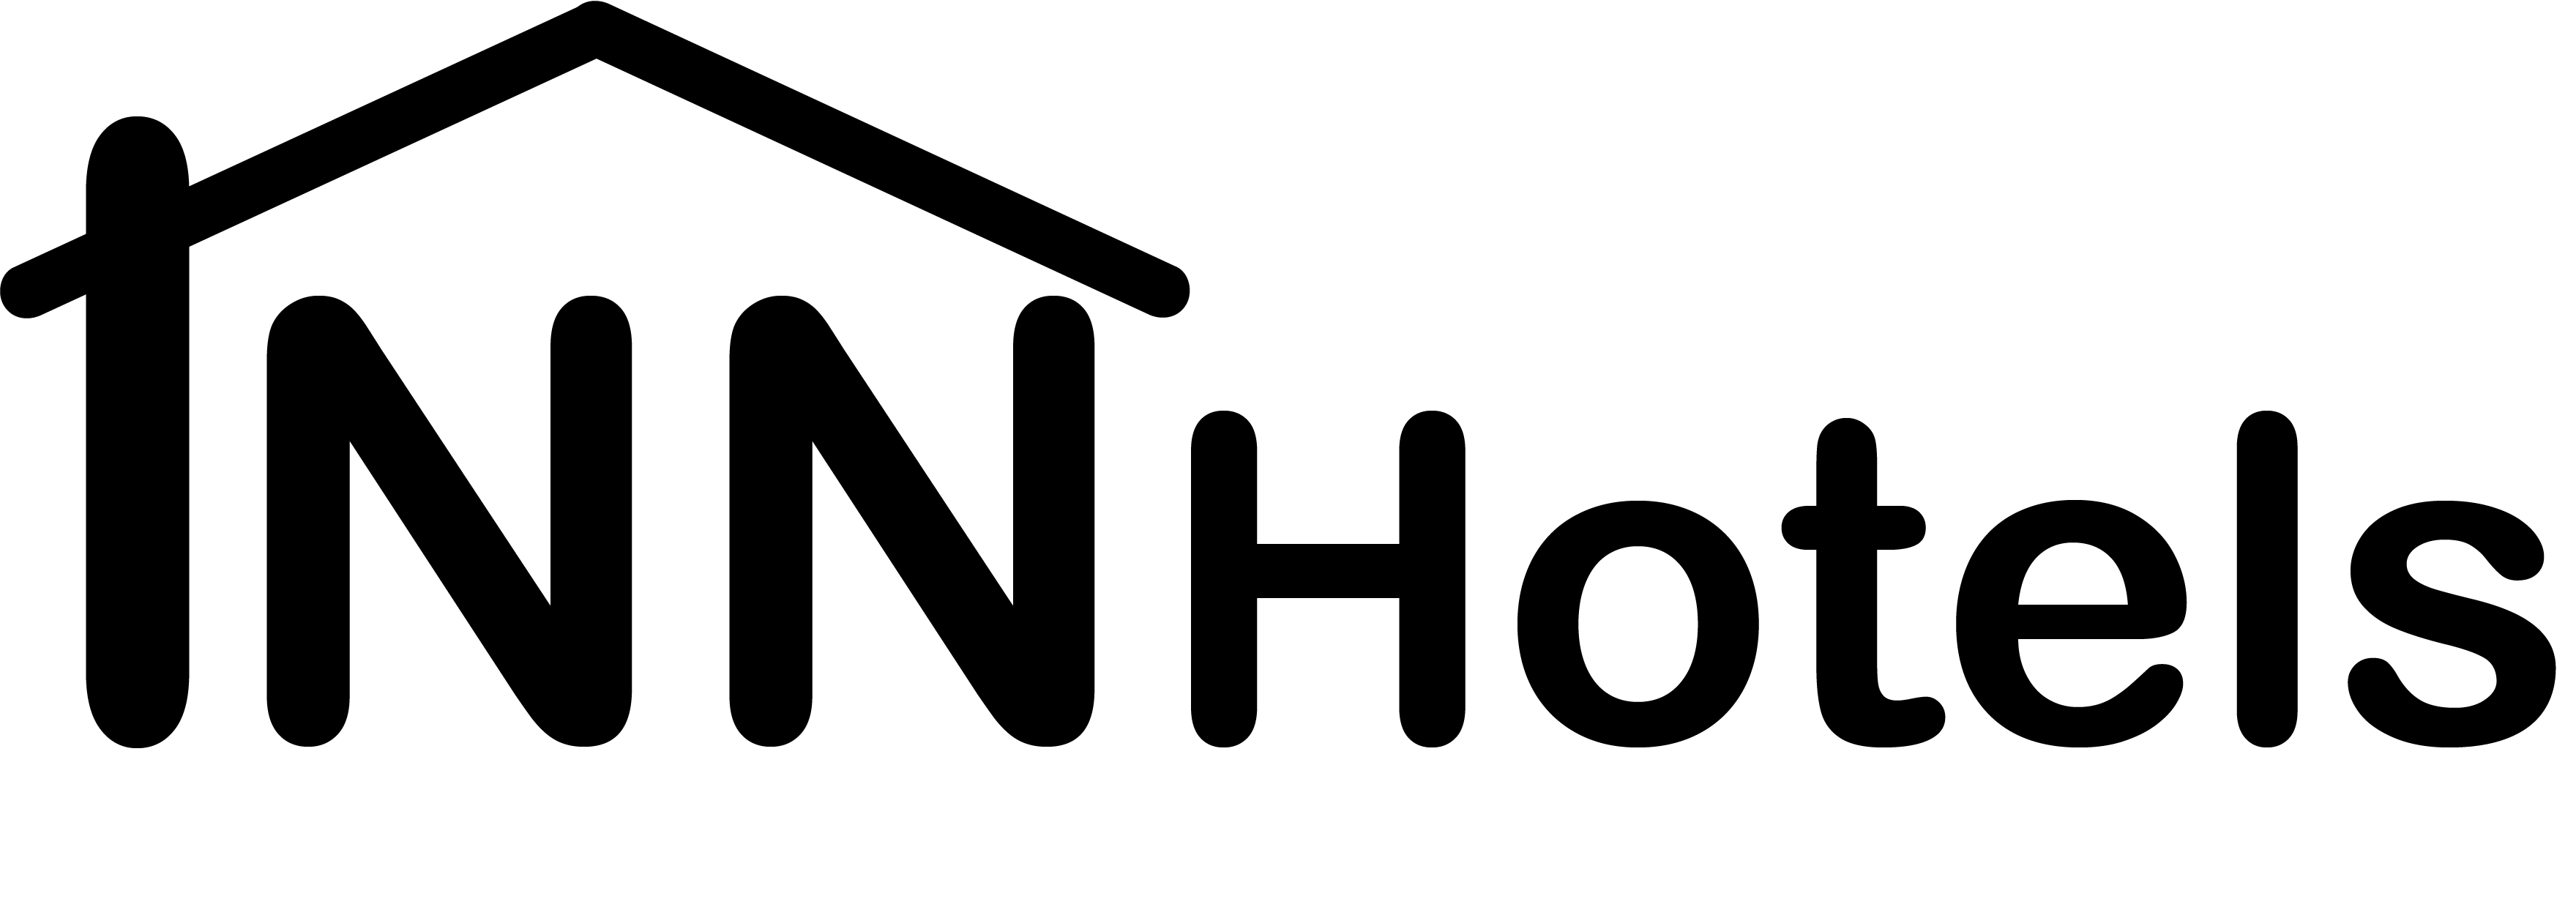 a close up of a logo,moon,dark